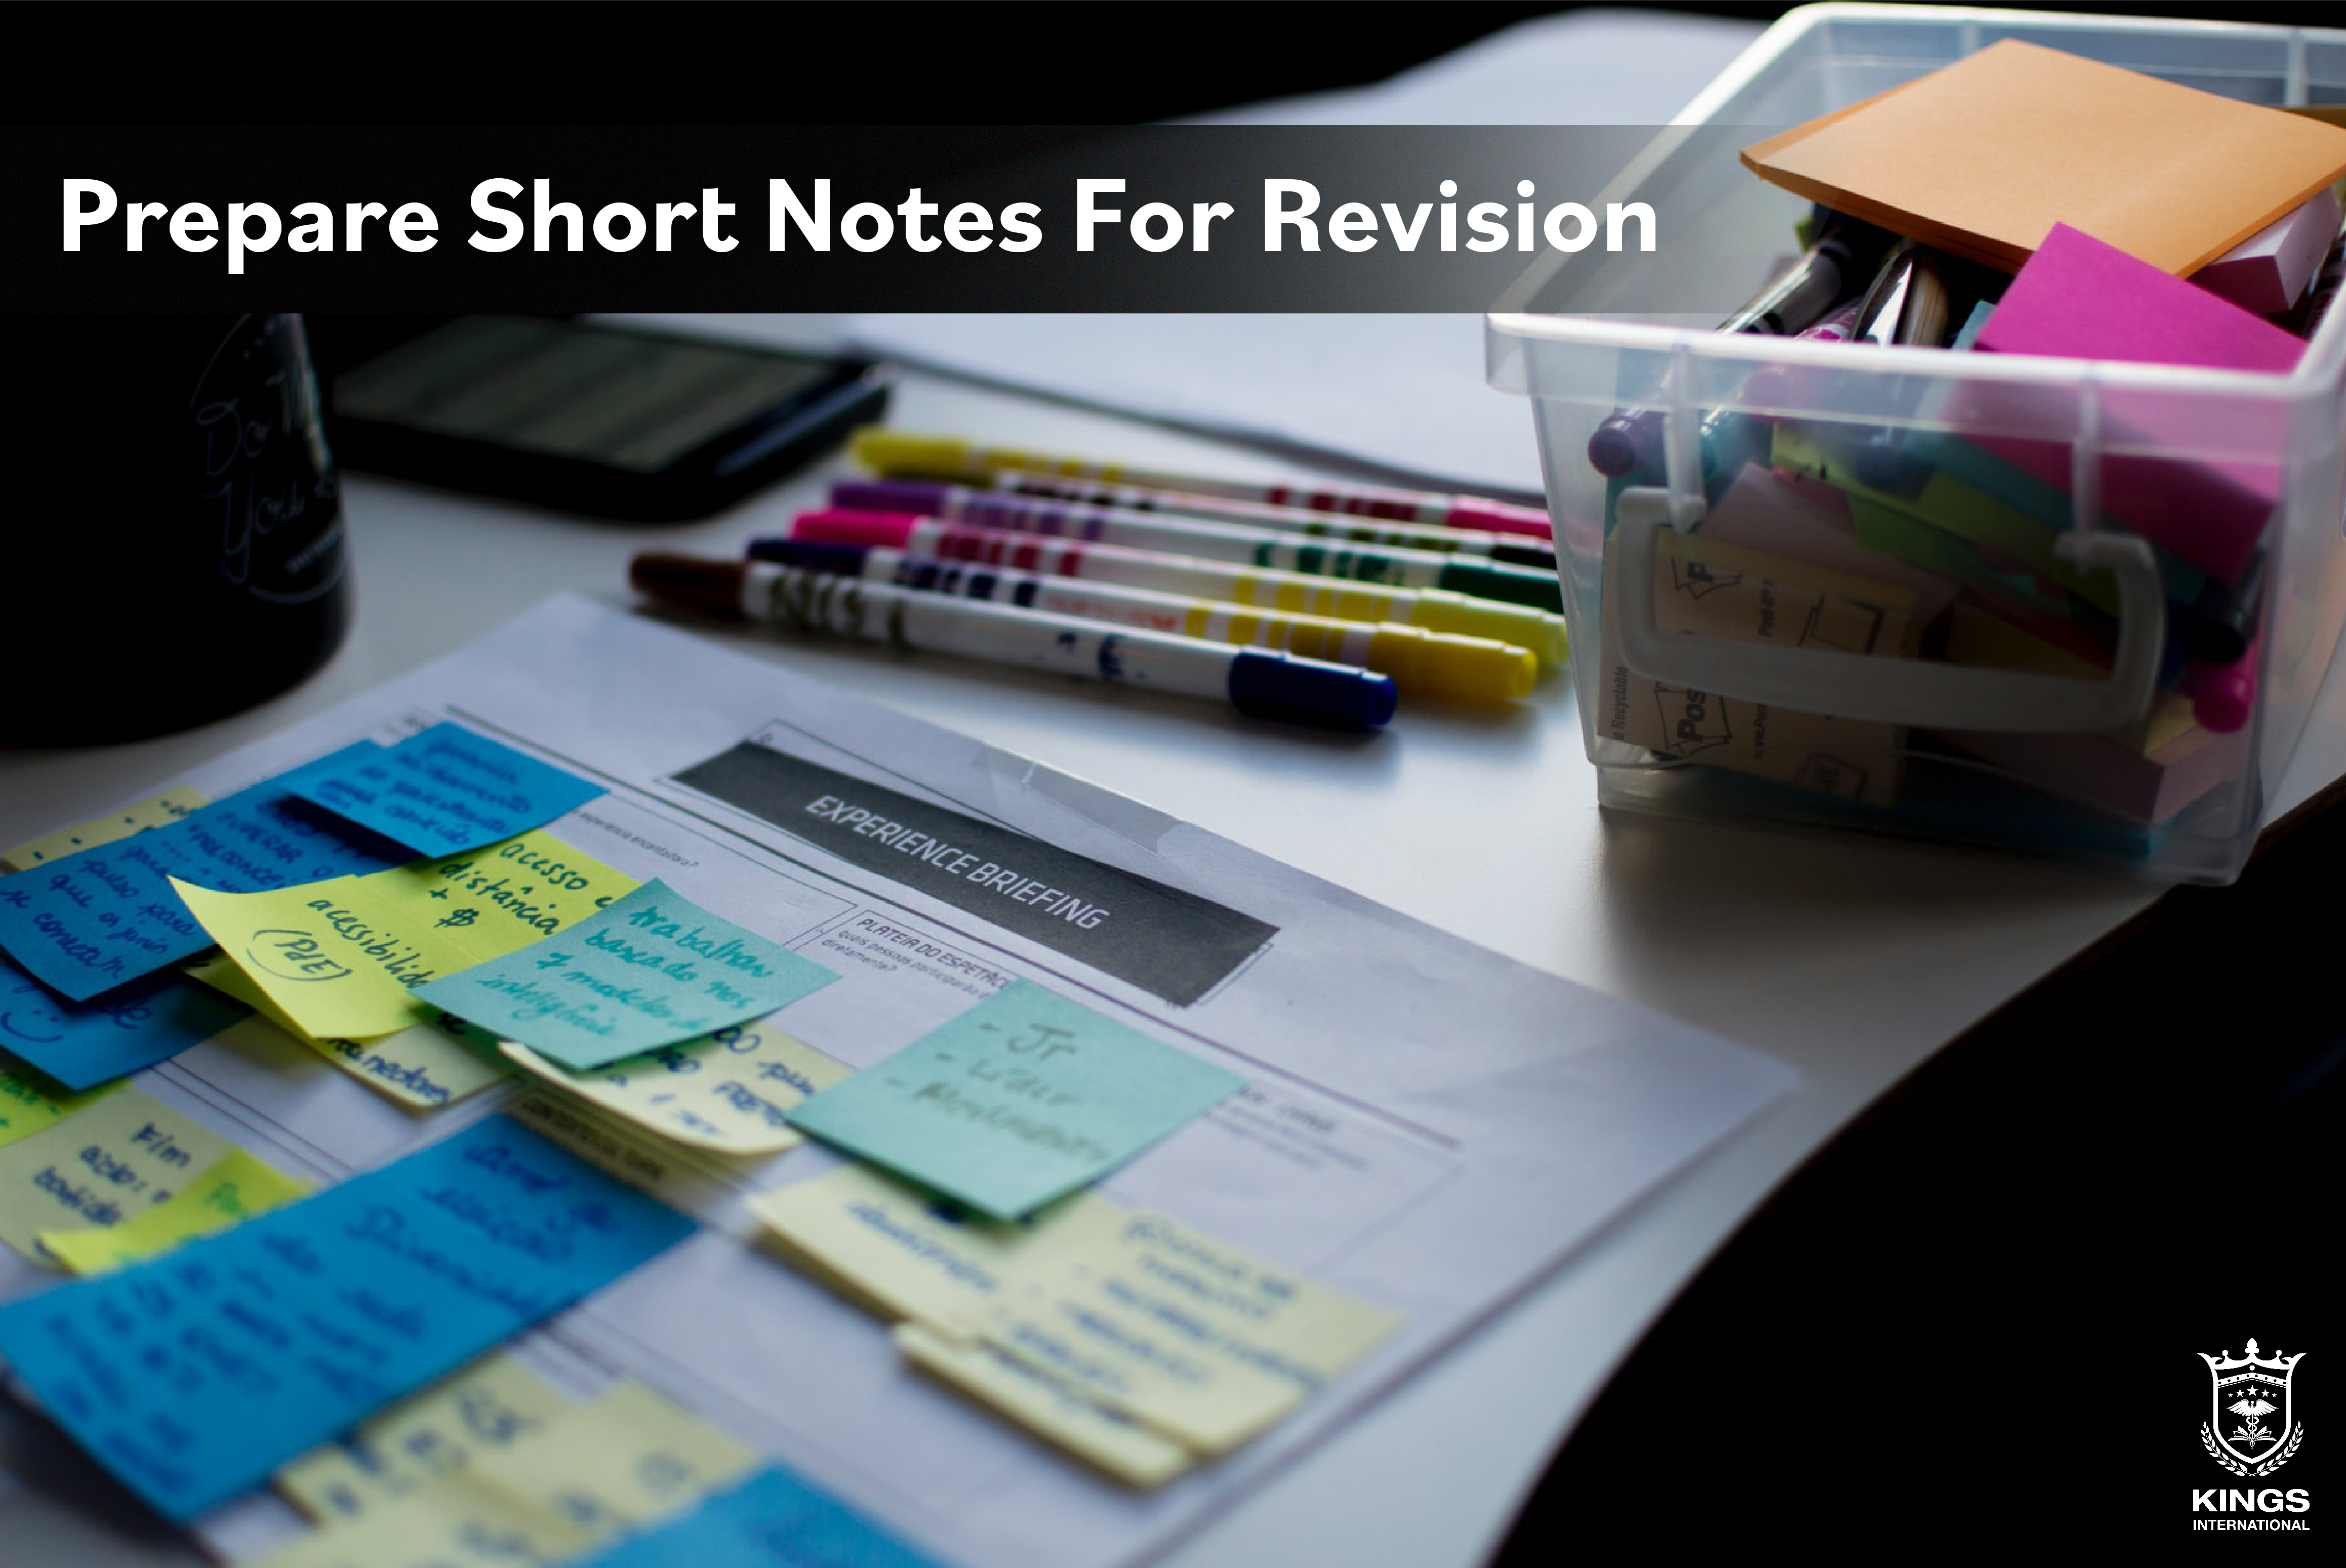  Prepare short notes for revision: NEET 2021 preparation tip